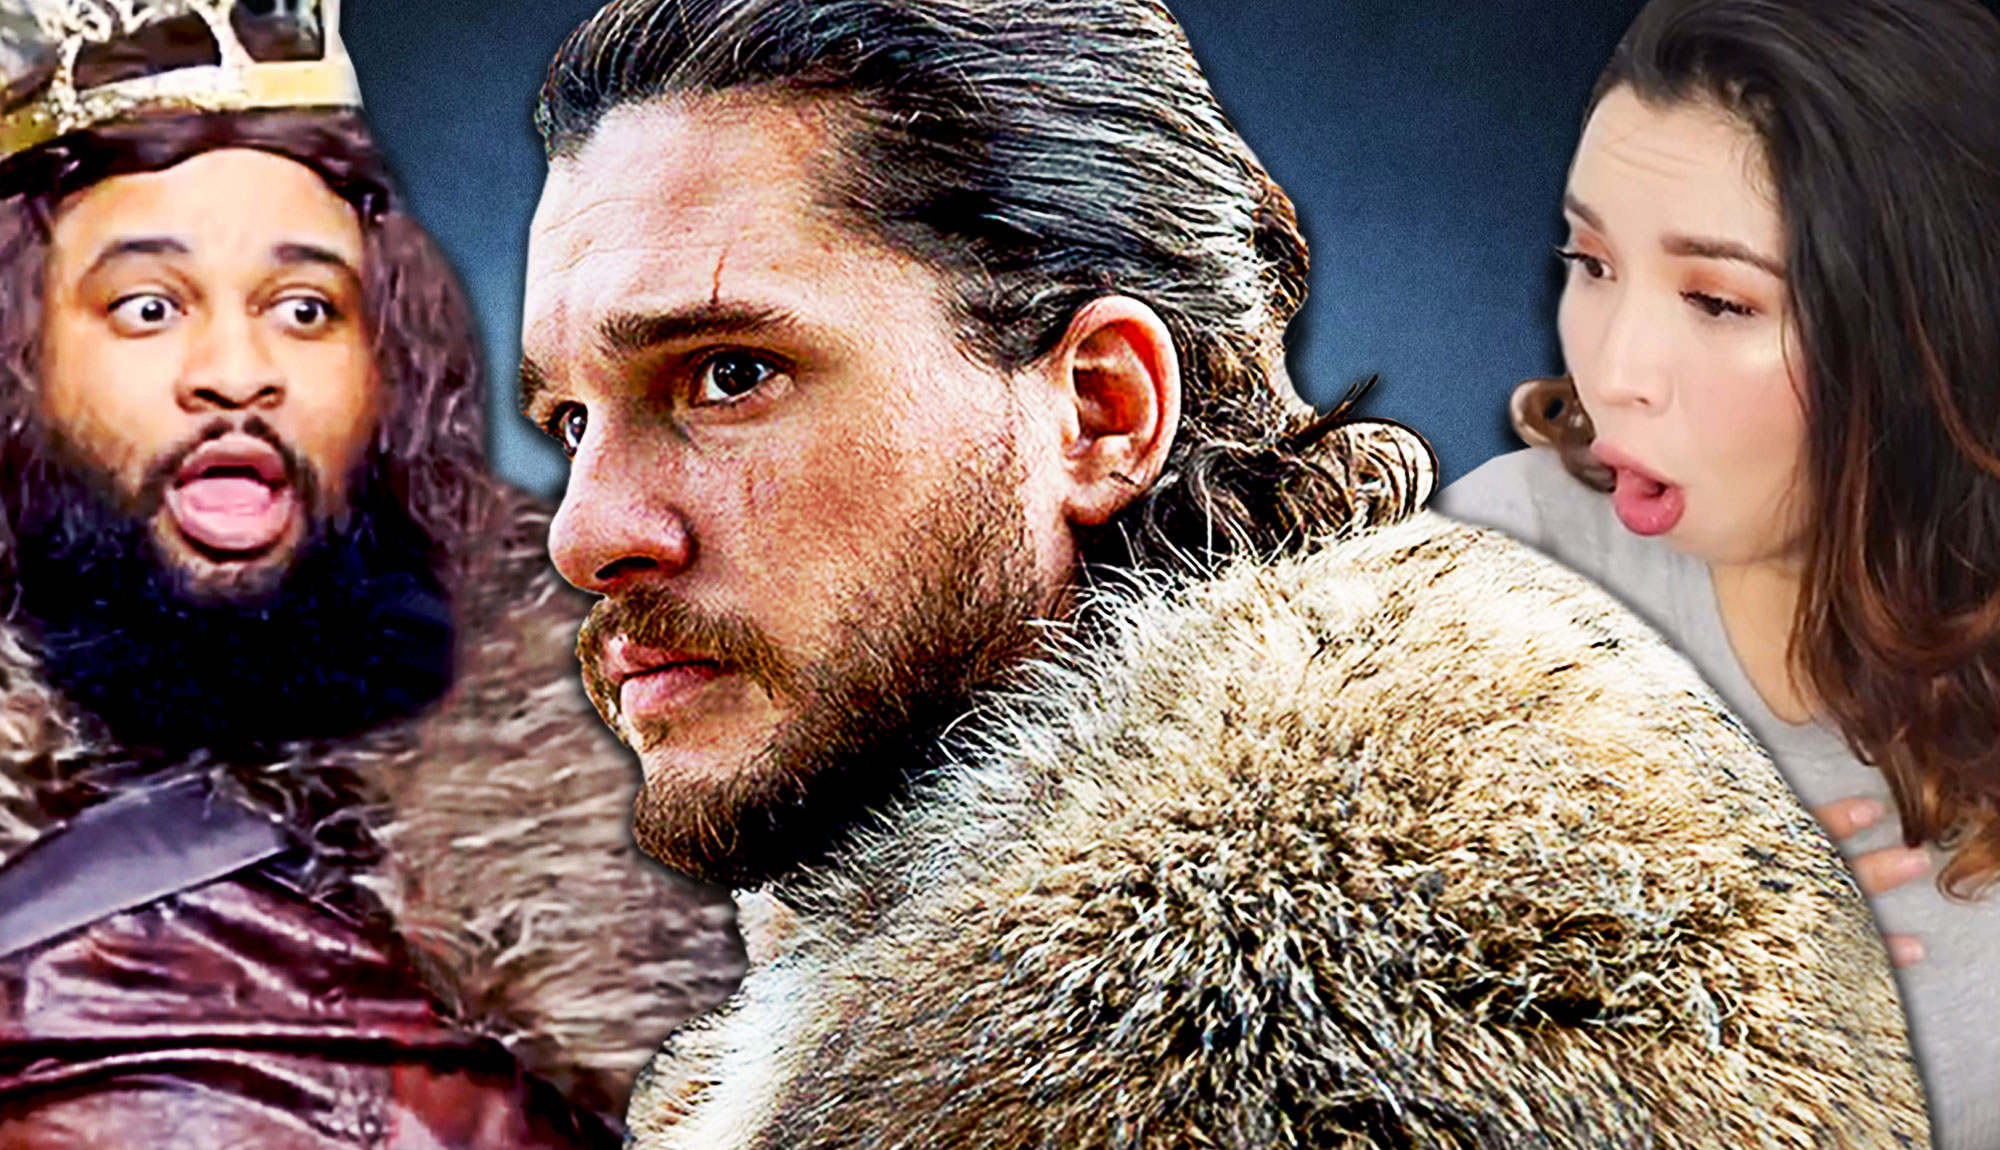 Fans React to Game of Thrones Season 8 Episode 1: “Winterfell”